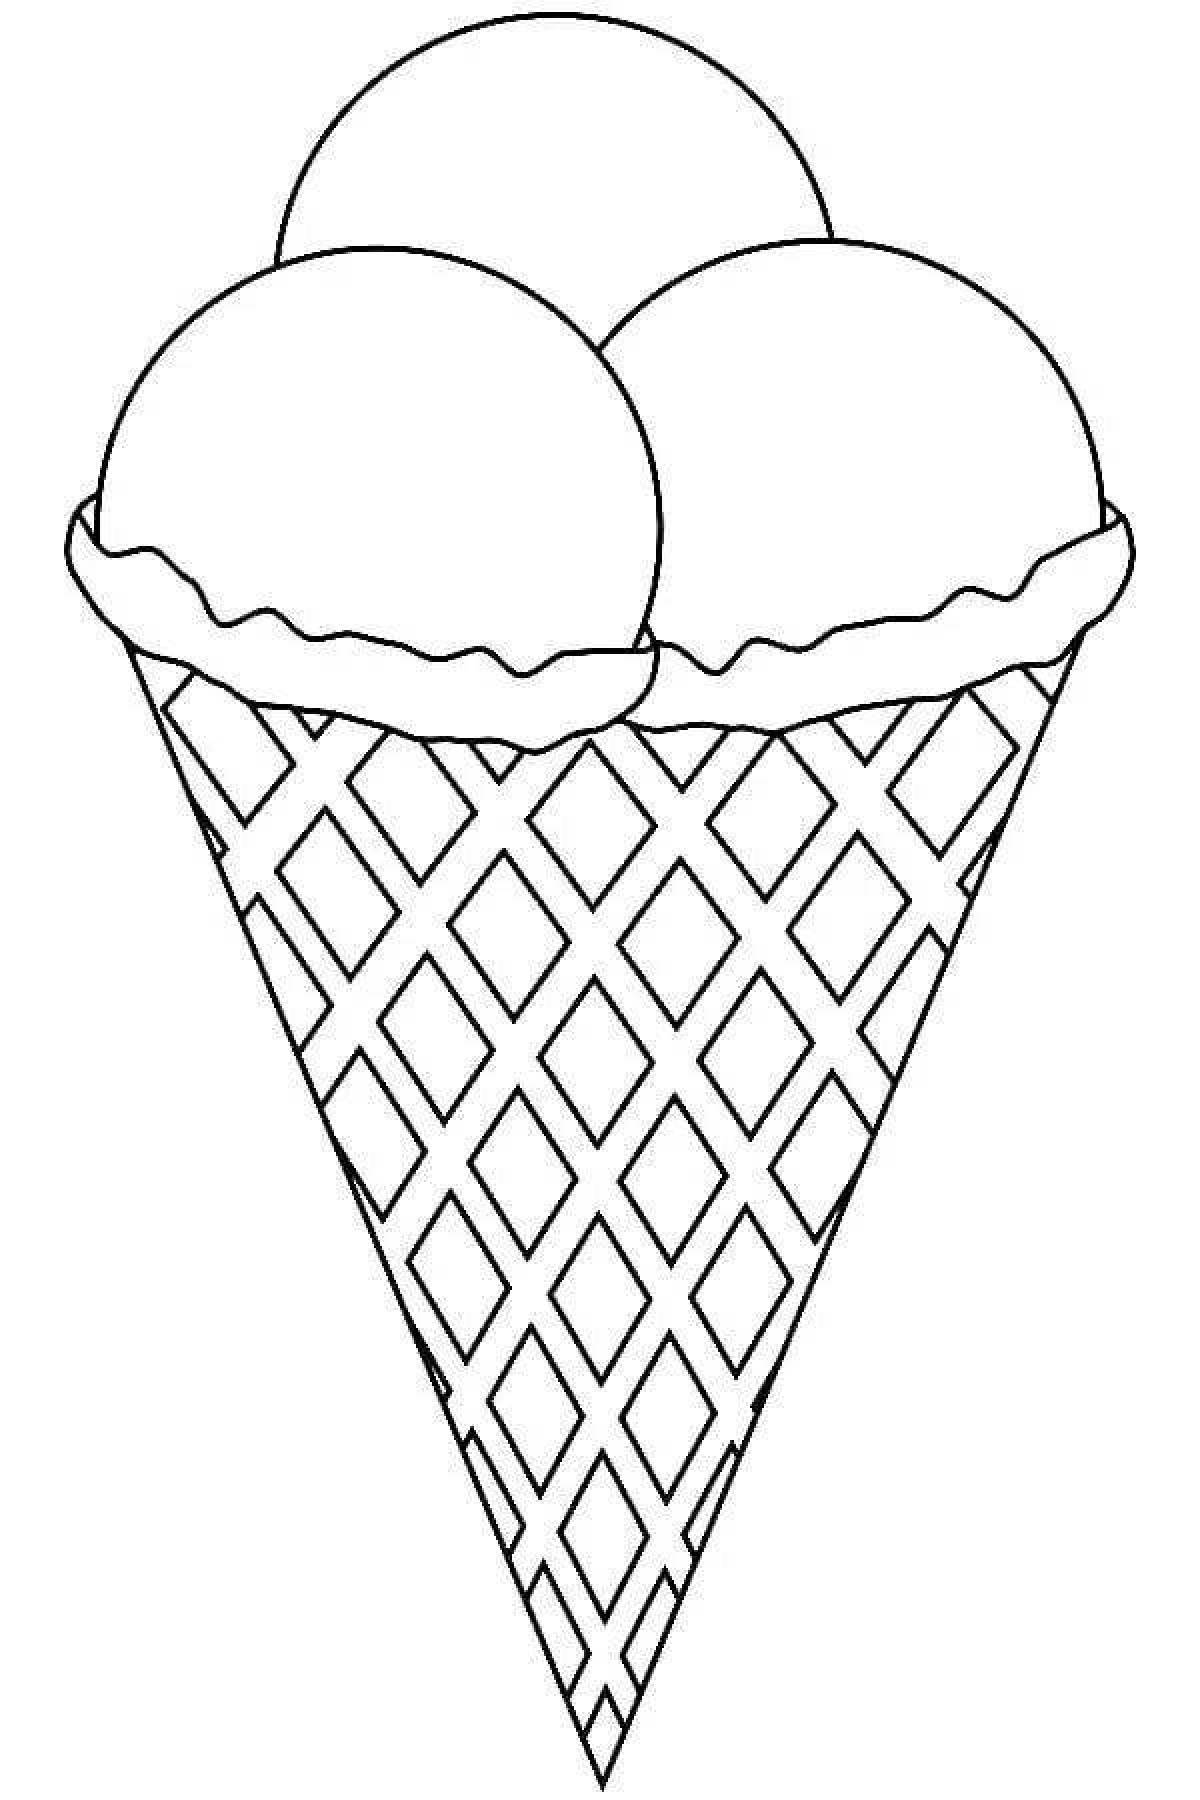 Delicious ice cream coloring page